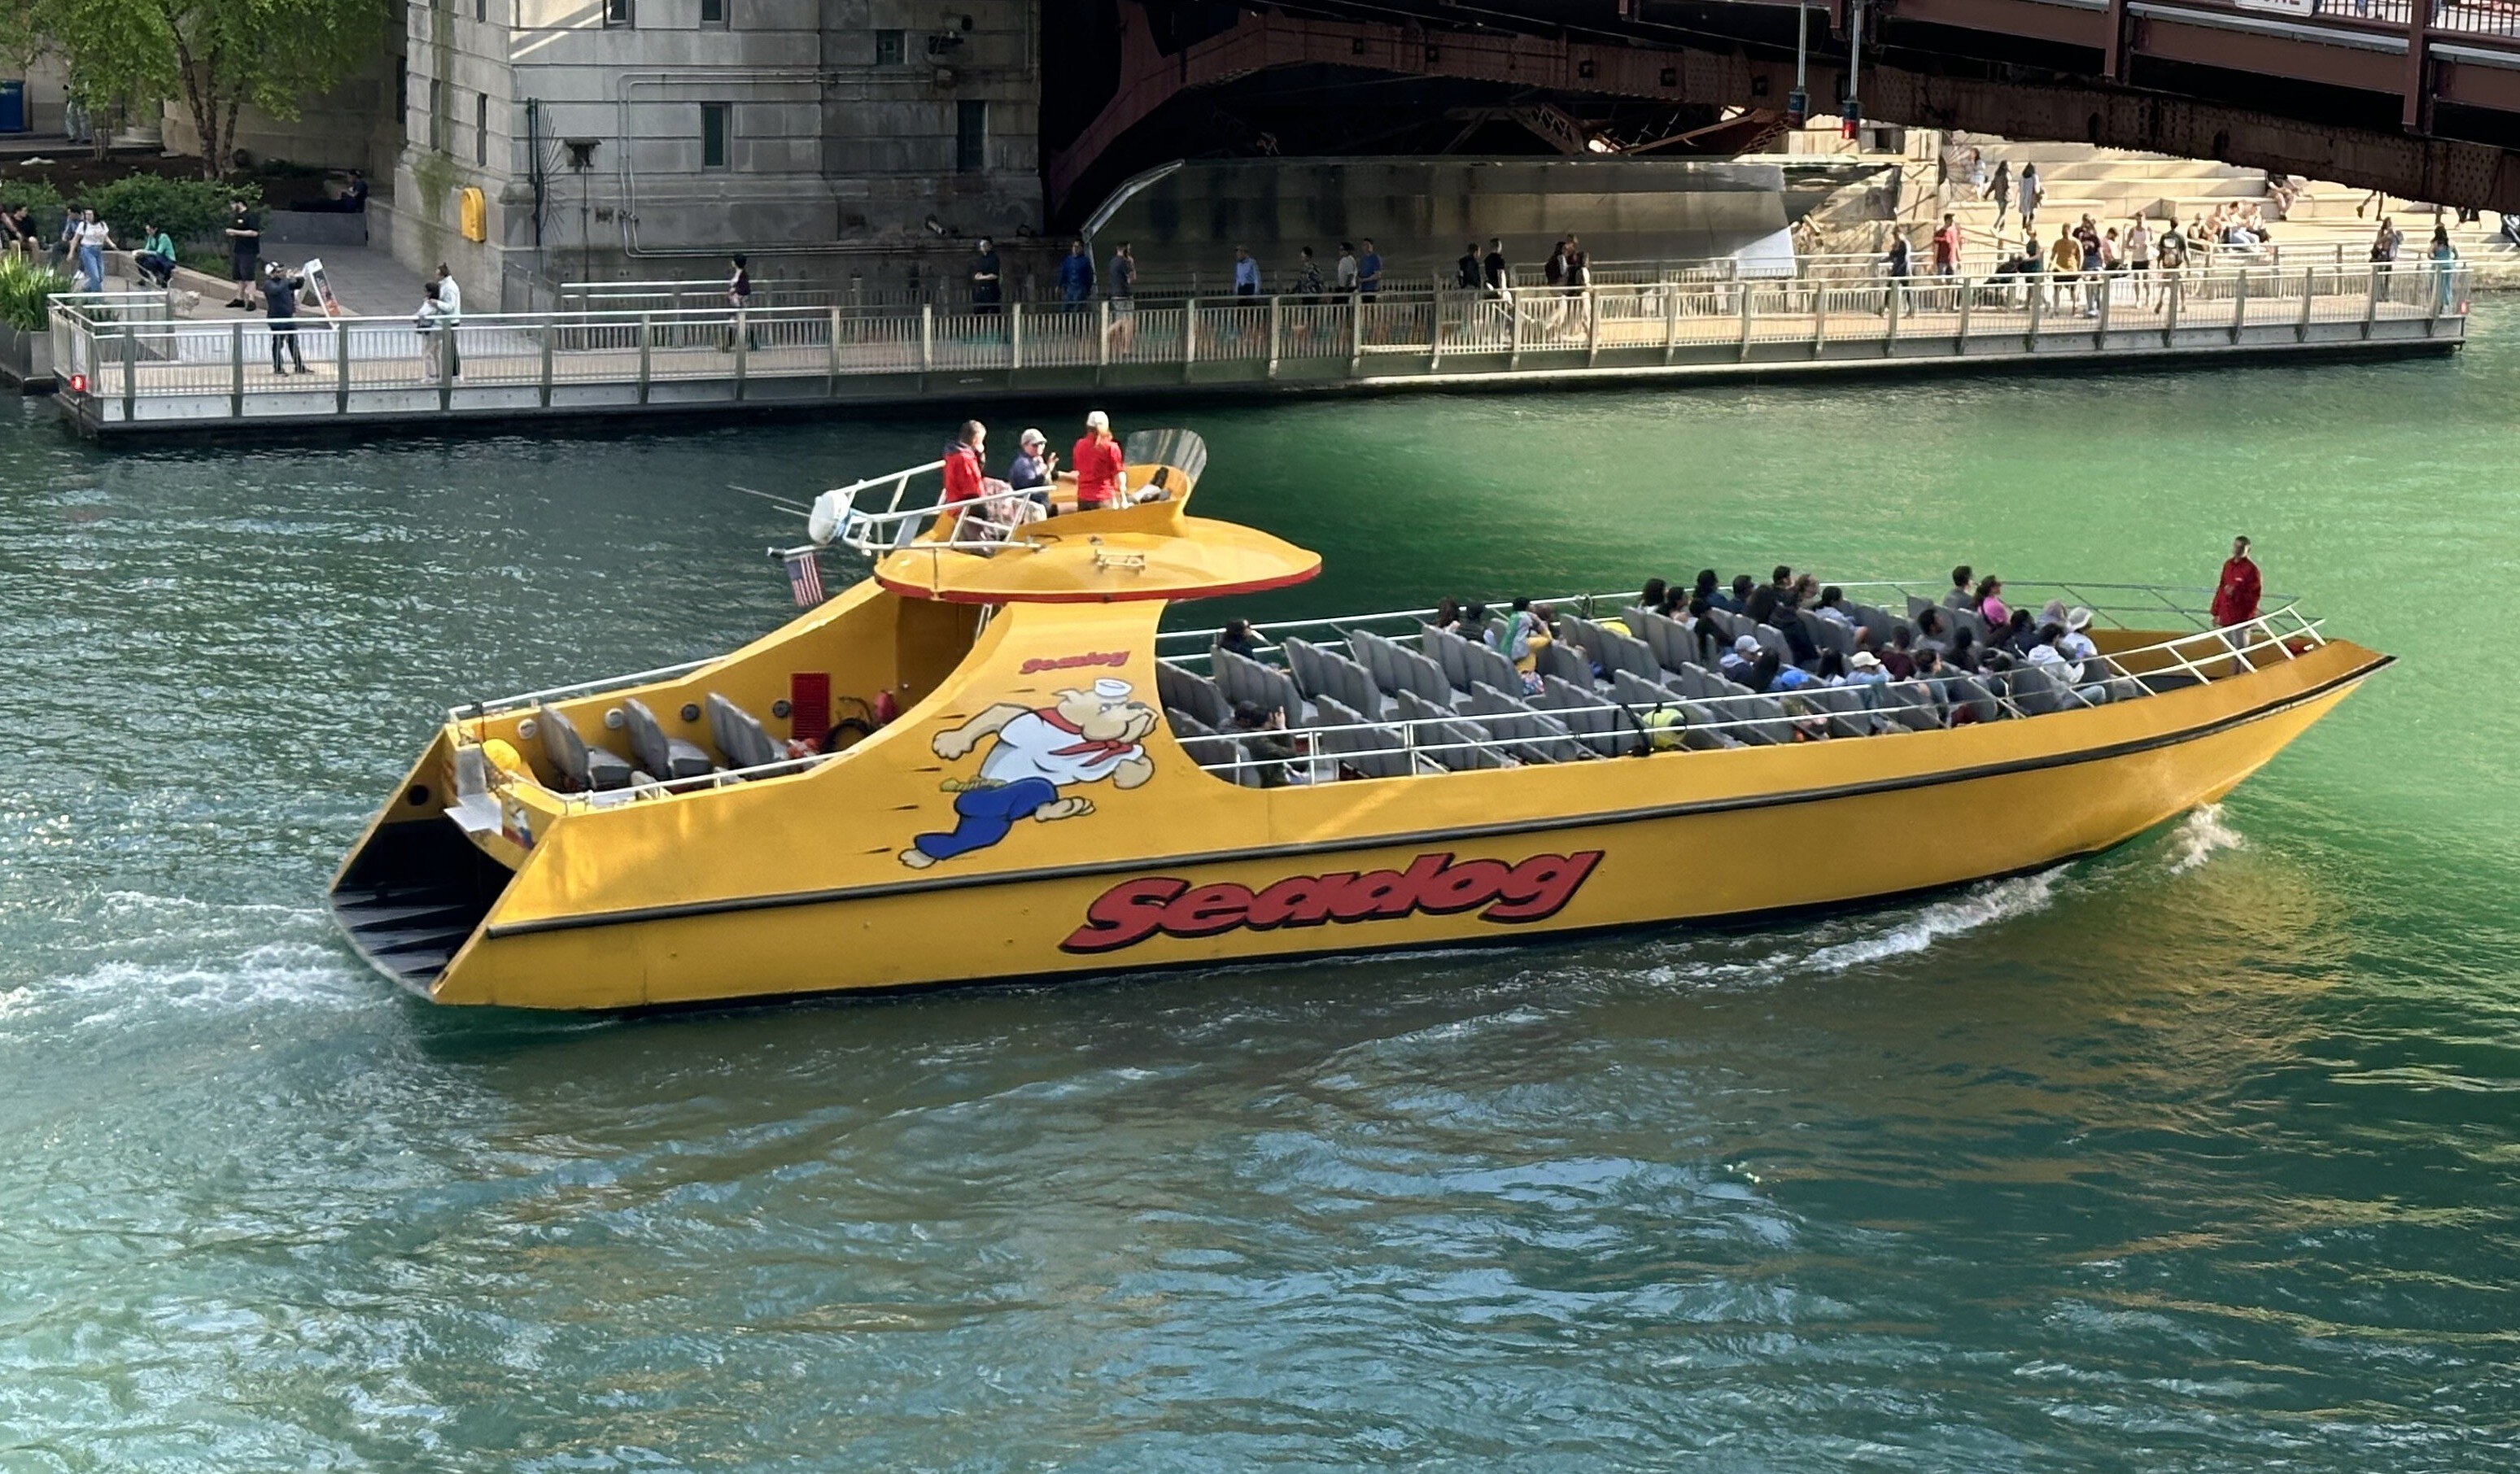 Chicago Seadog boat featuring H.O. Bostrom seats